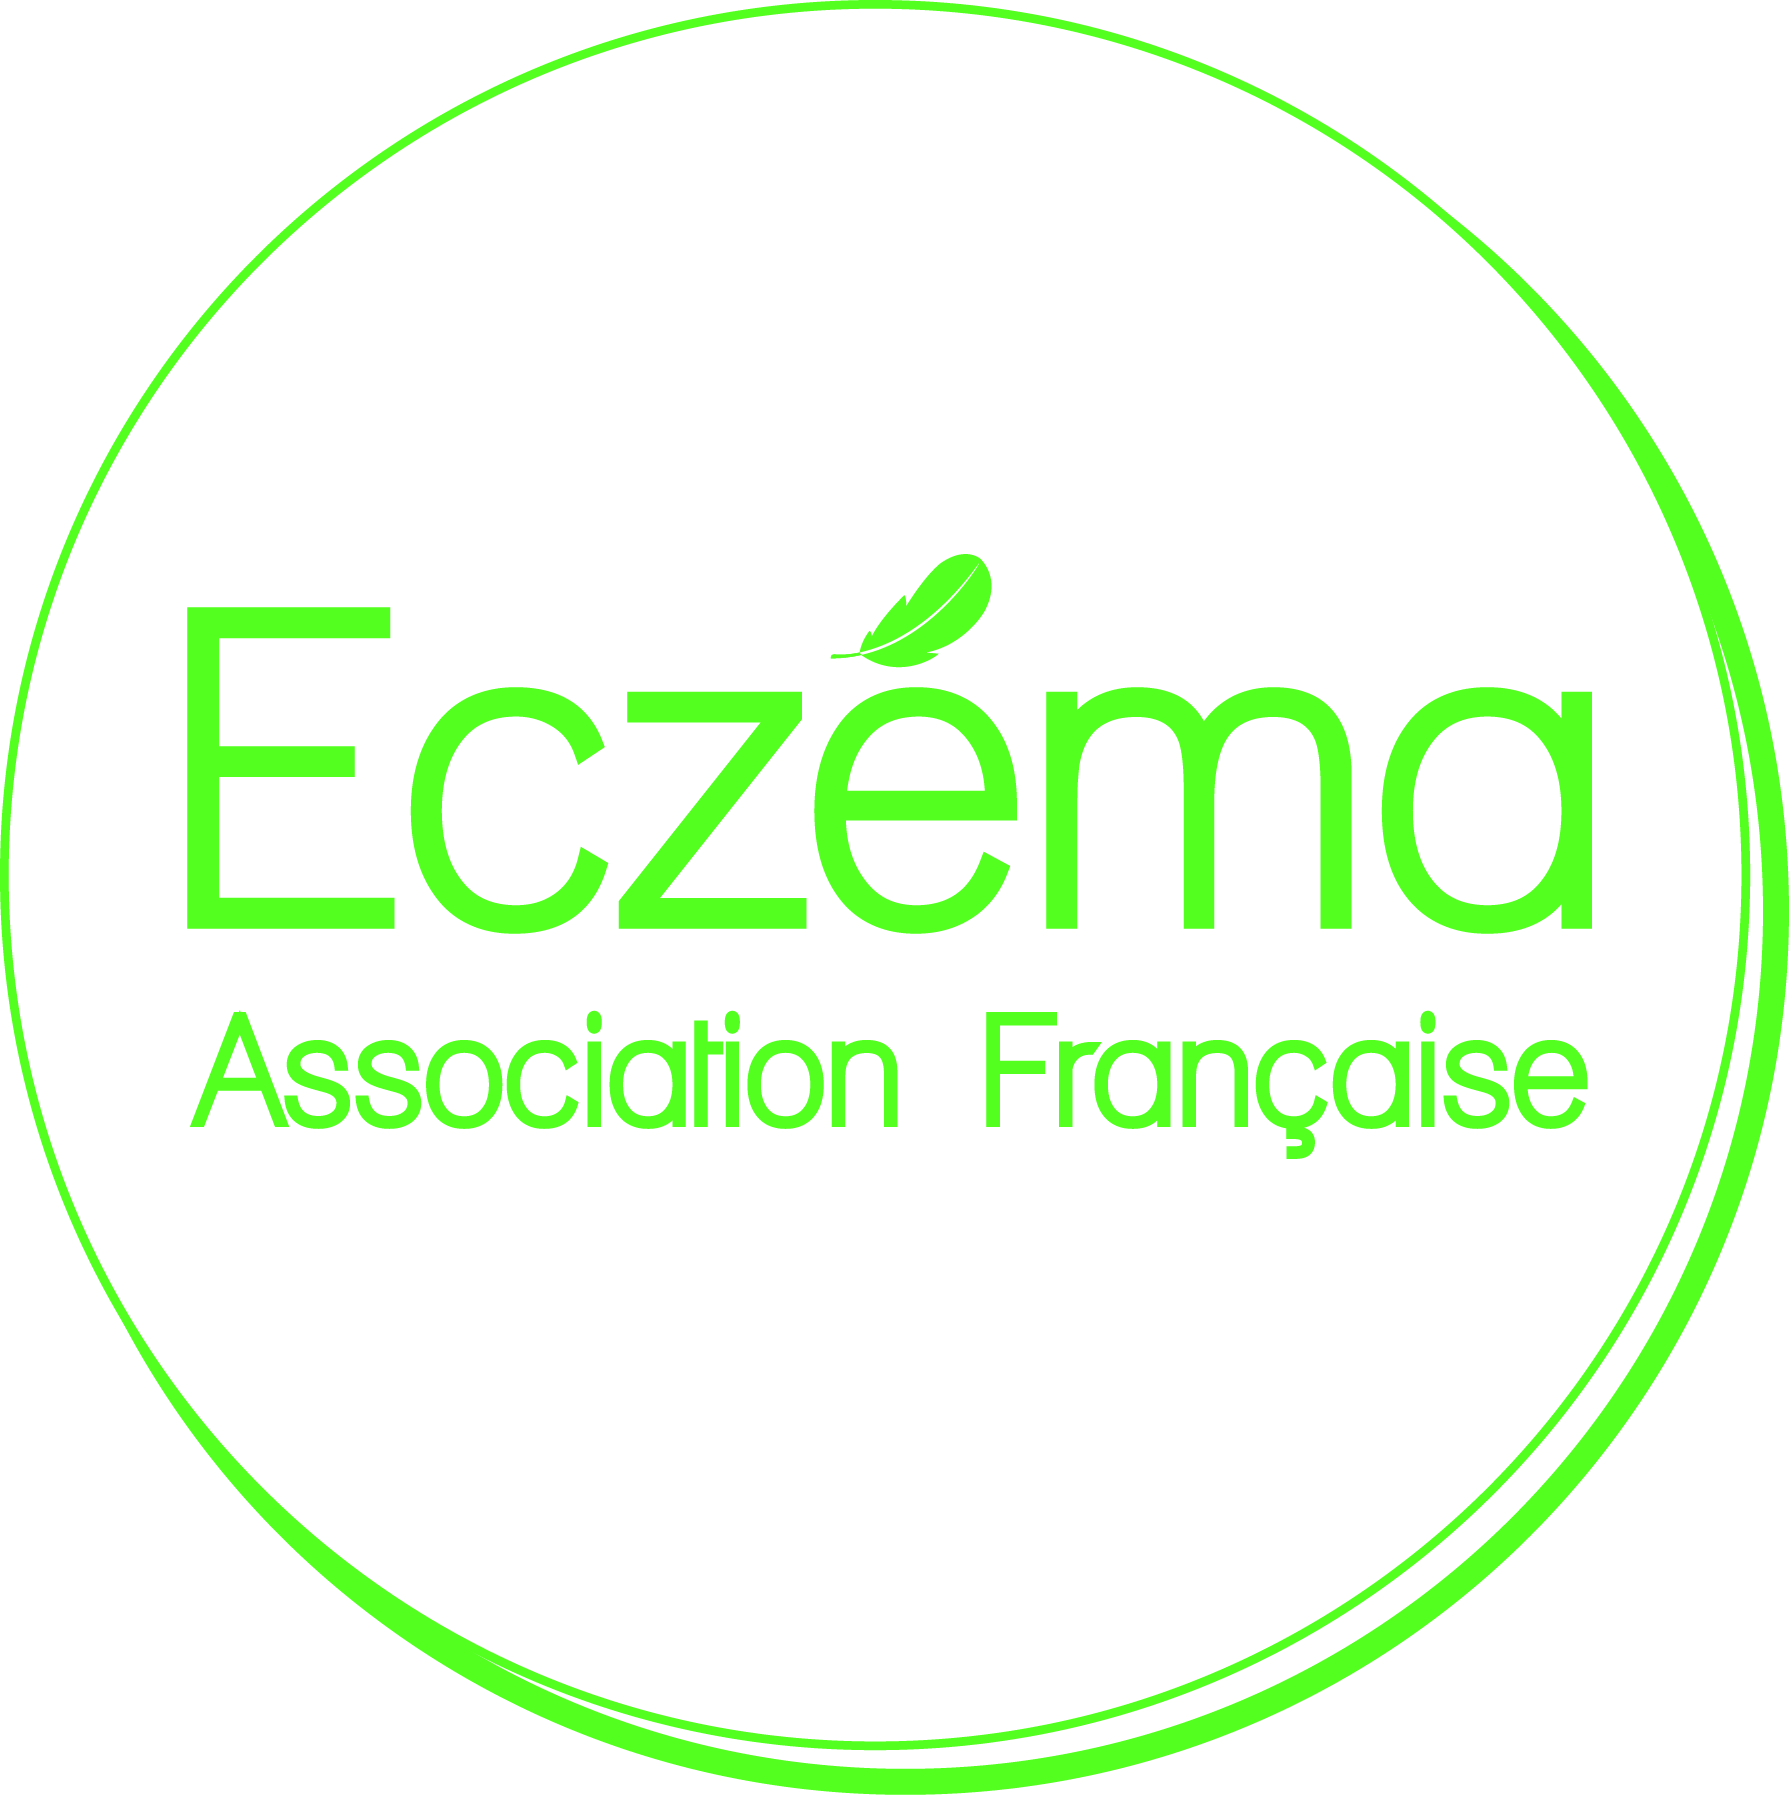 France Association Française de lEczema